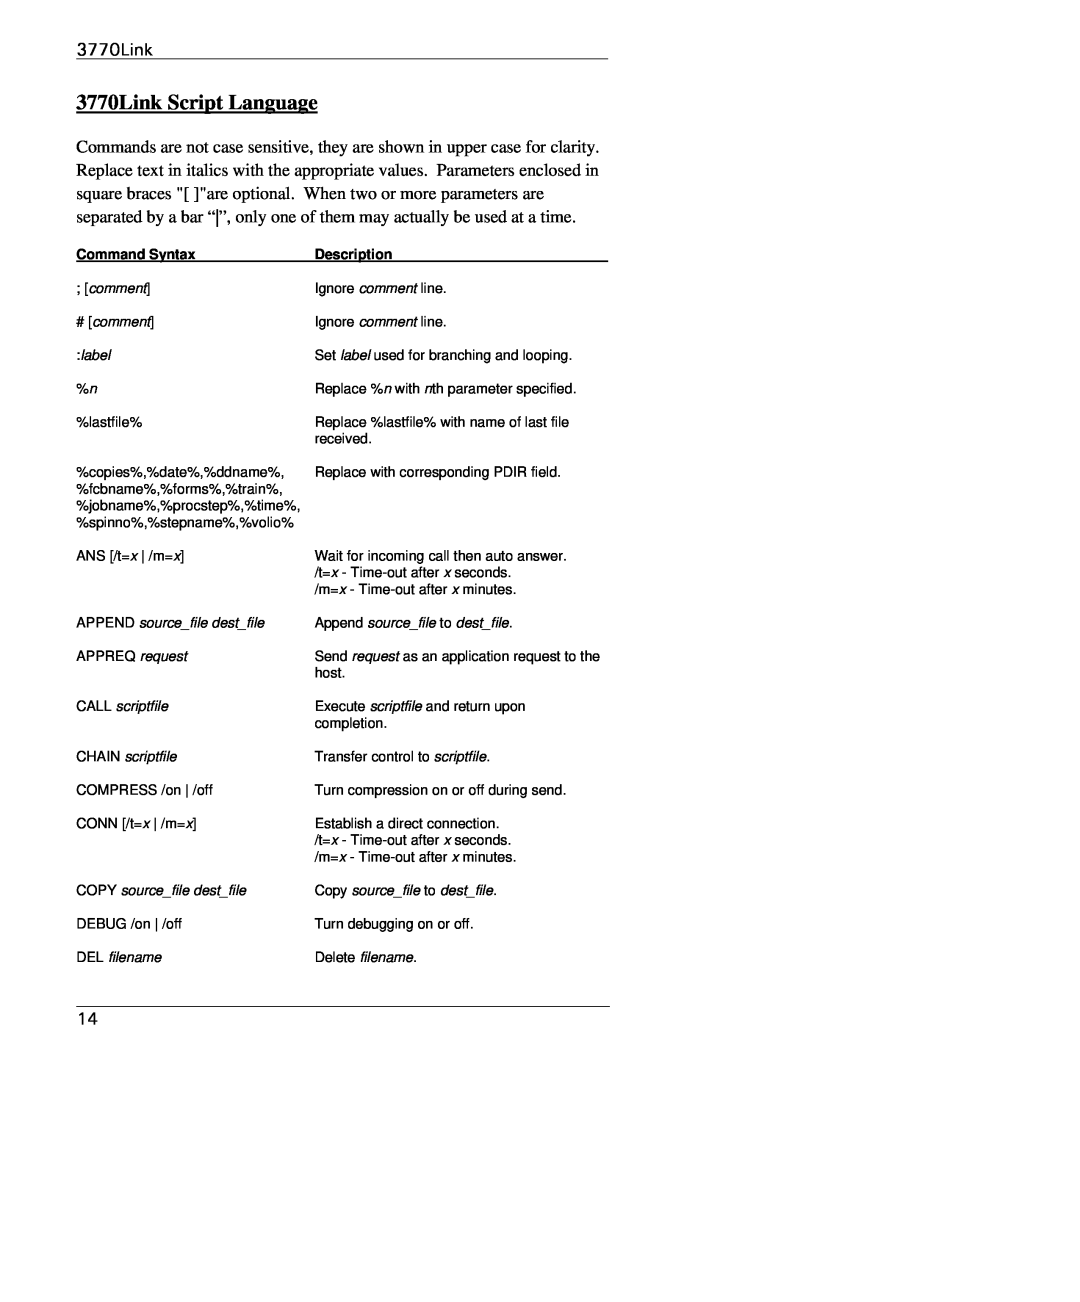 IBM manual 3770Link Script Language 